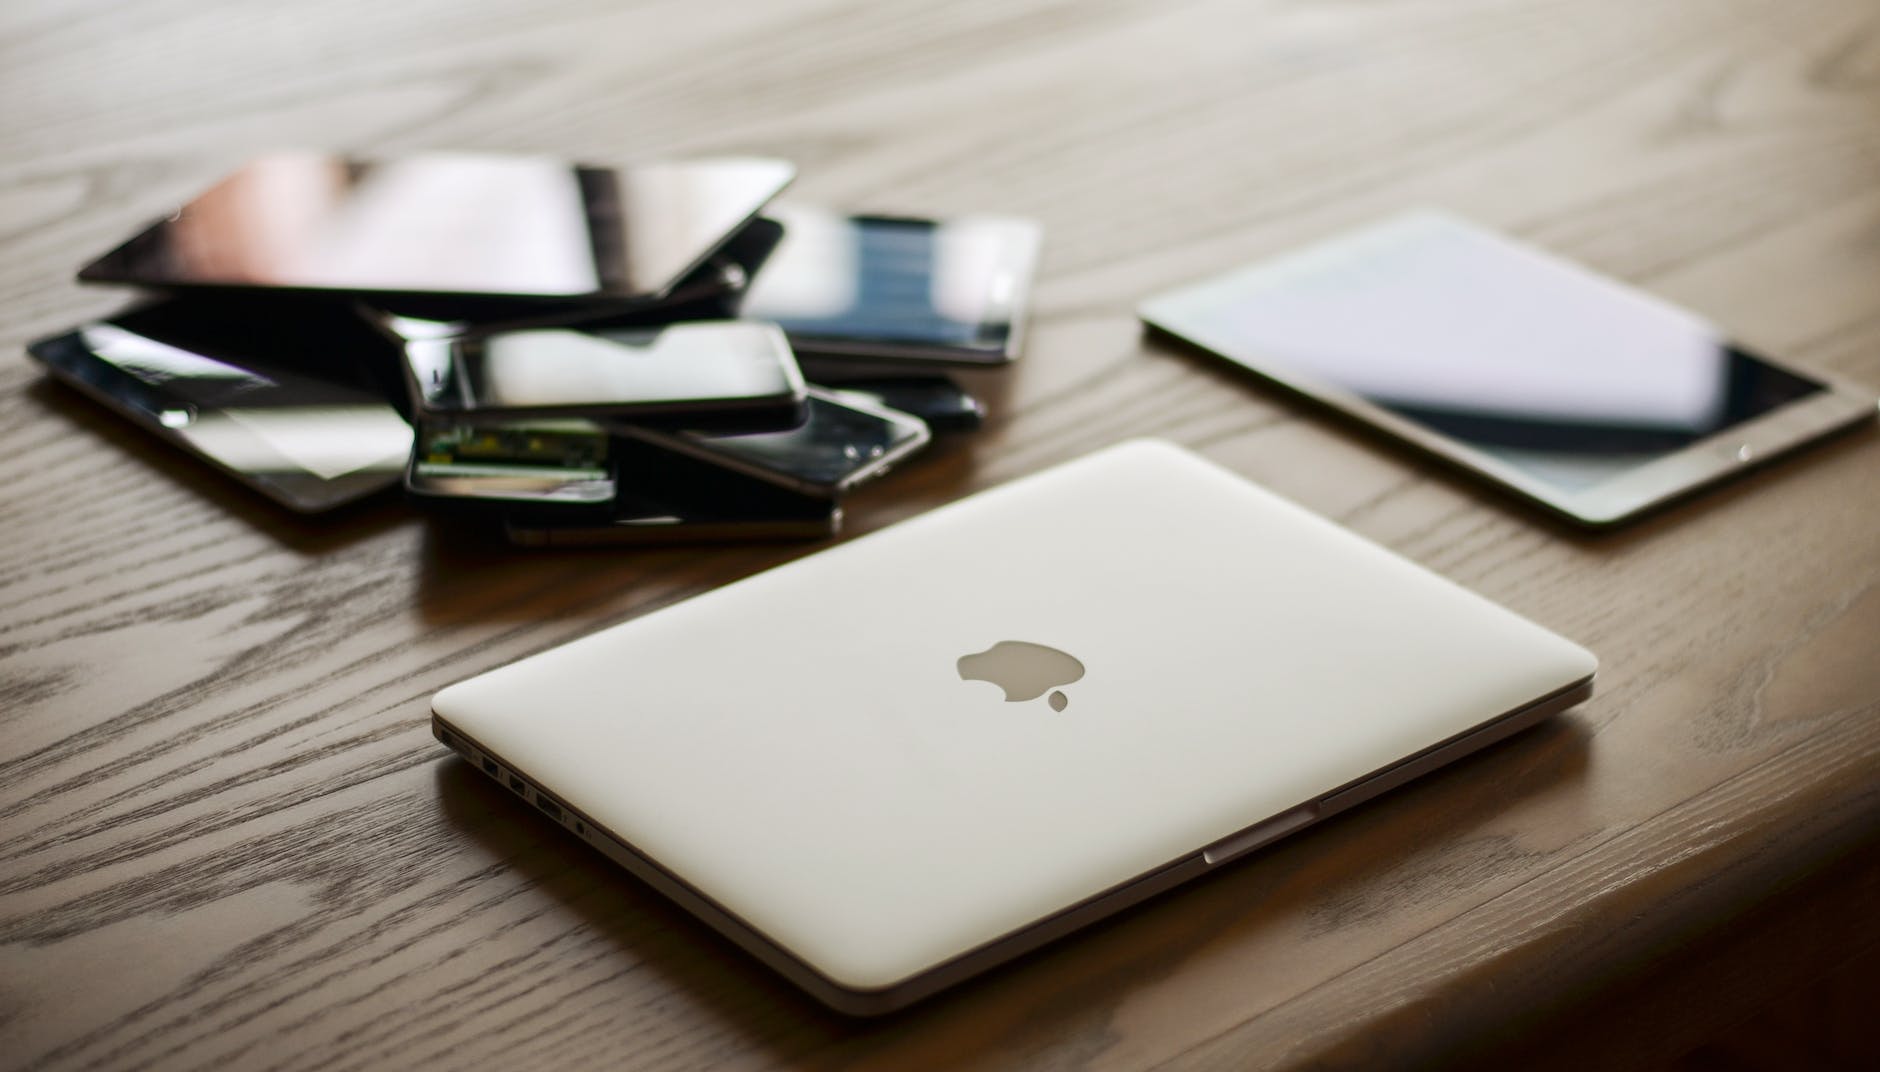 macbook and ipad on desk